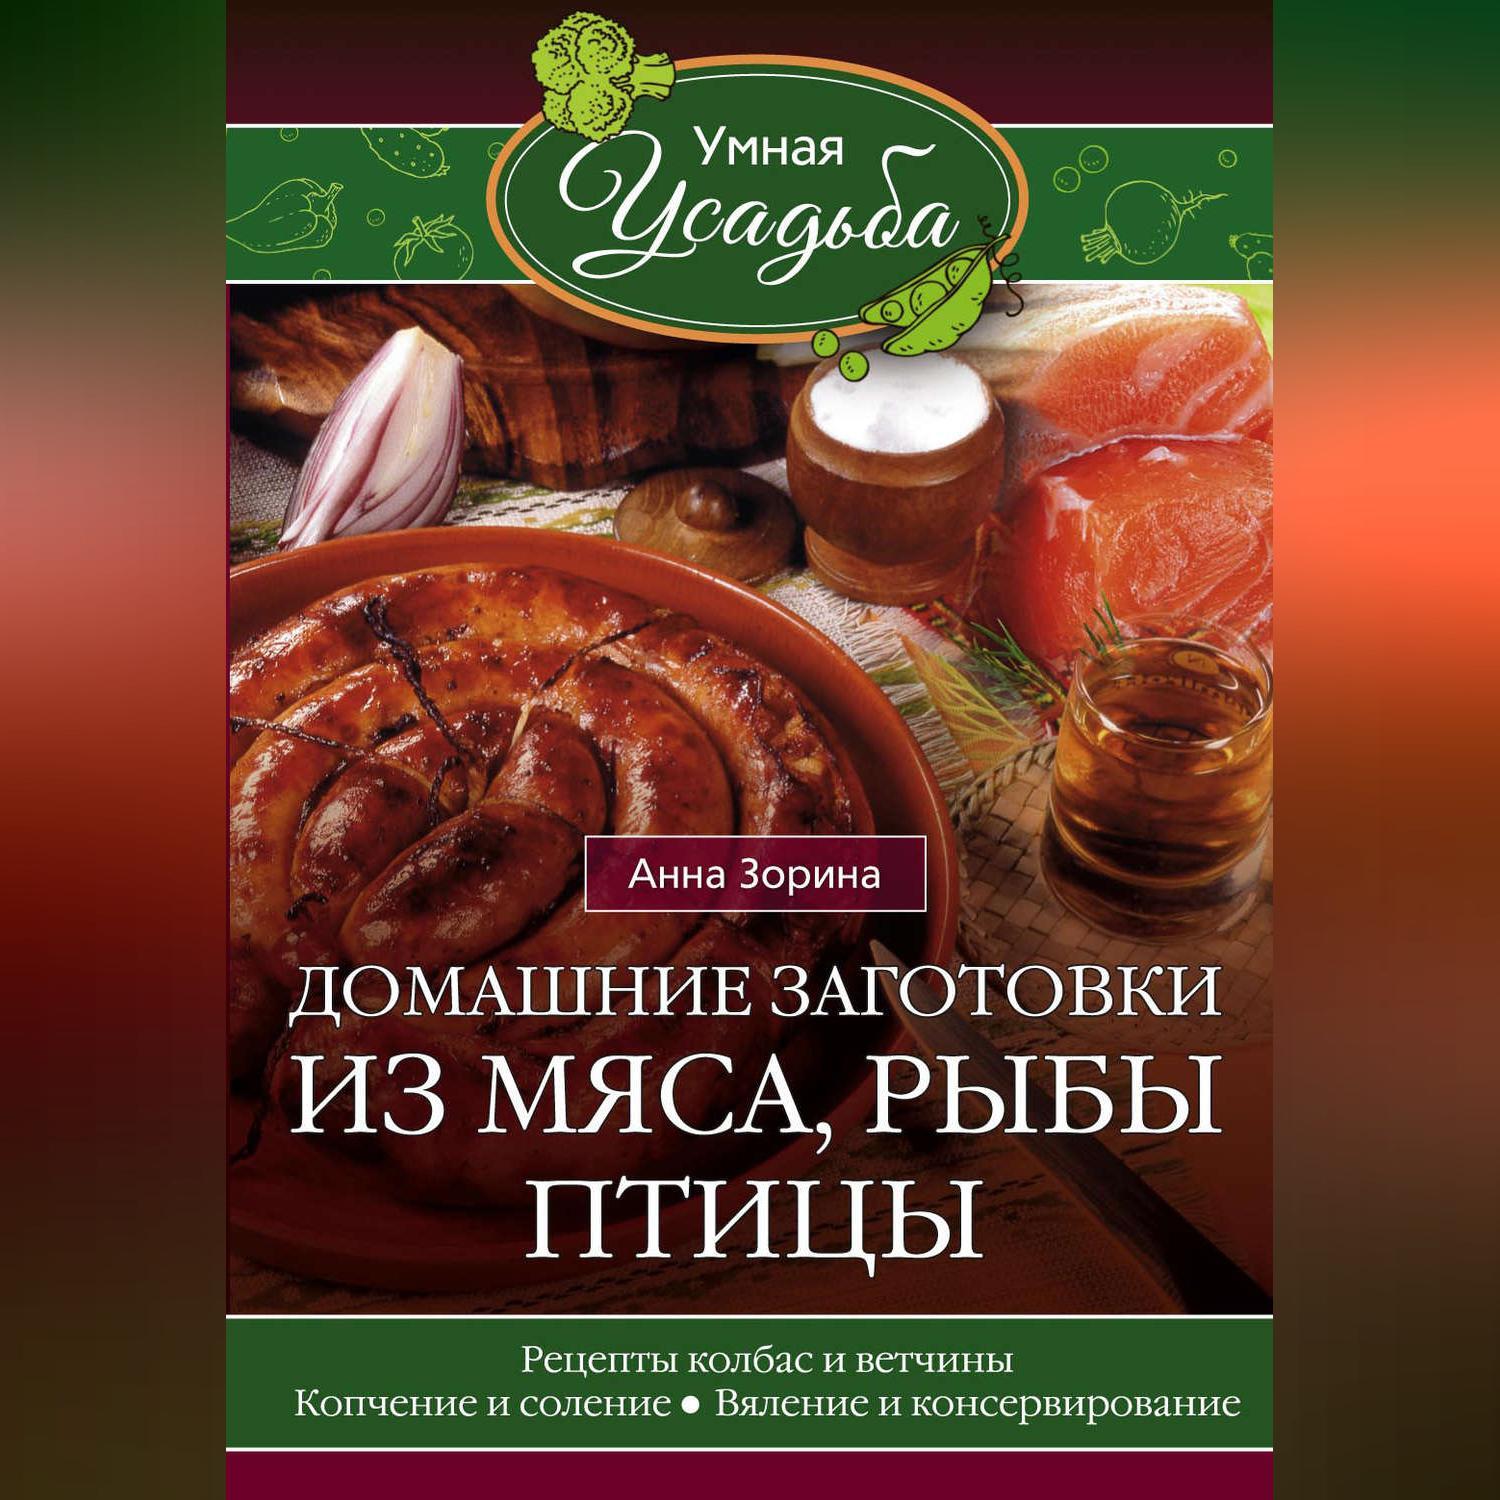 Кухарка.ру — Кулинарная энциклопедия